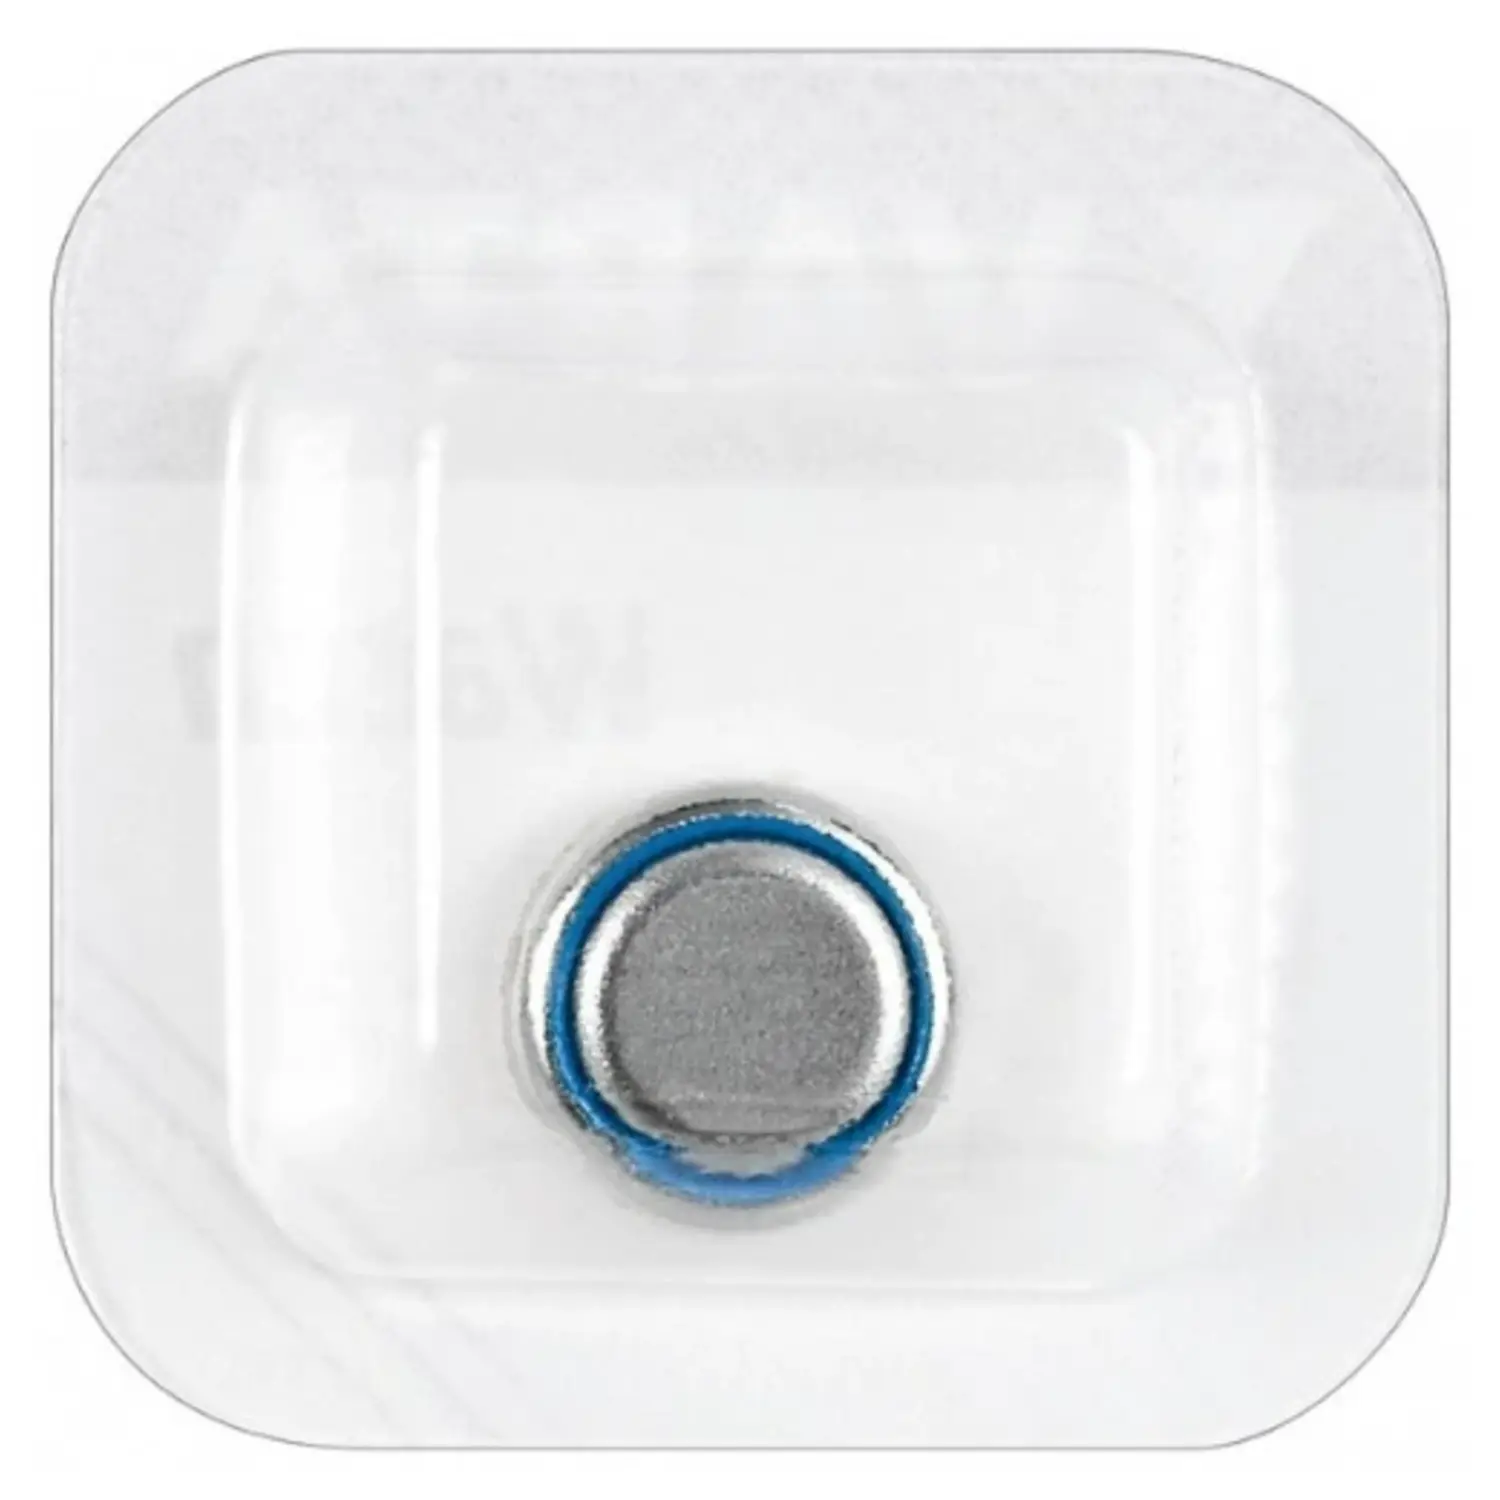 immagine pila batteria bottone per orologio v396 1,55 volt